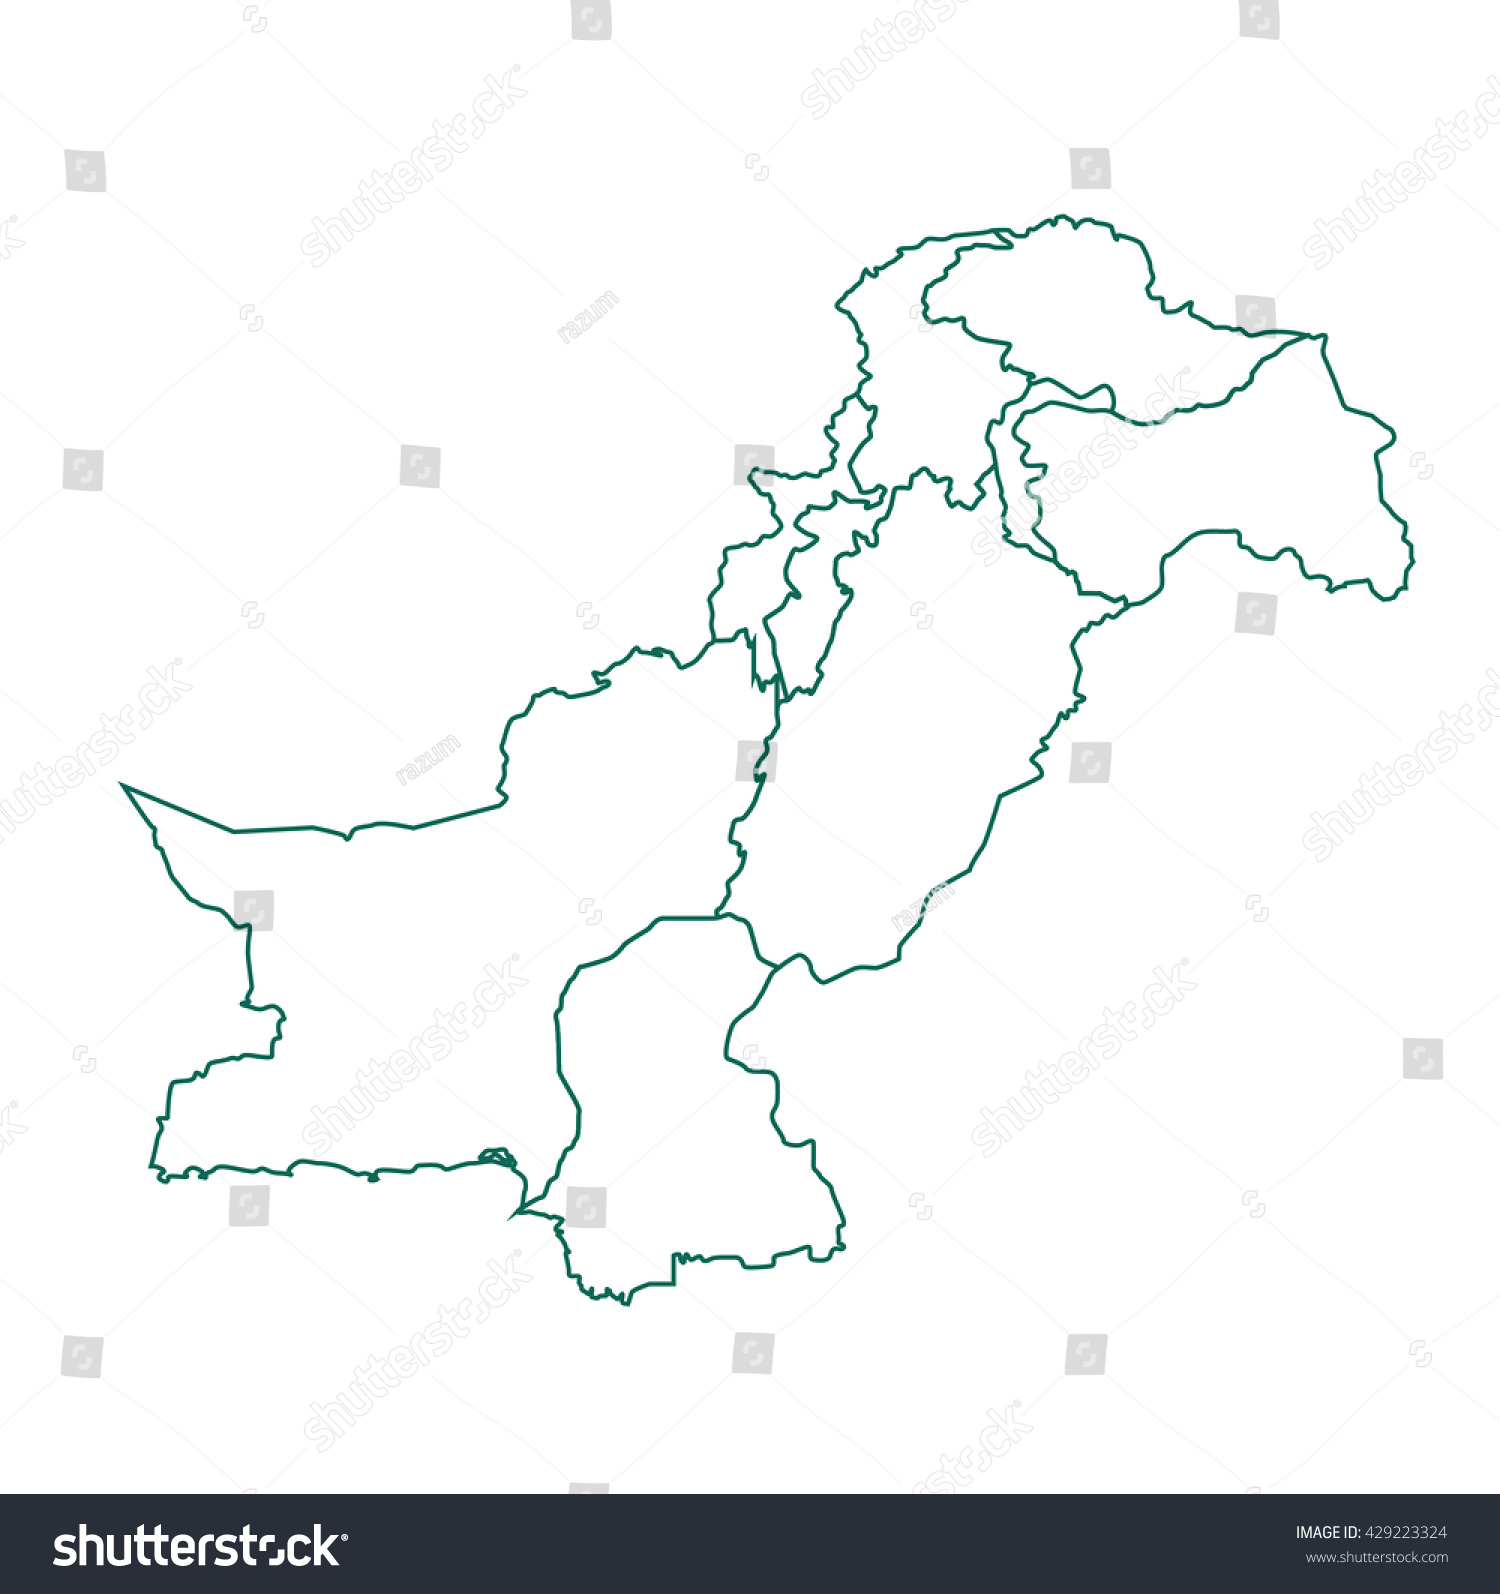 clipart of pakistan map - photo #15